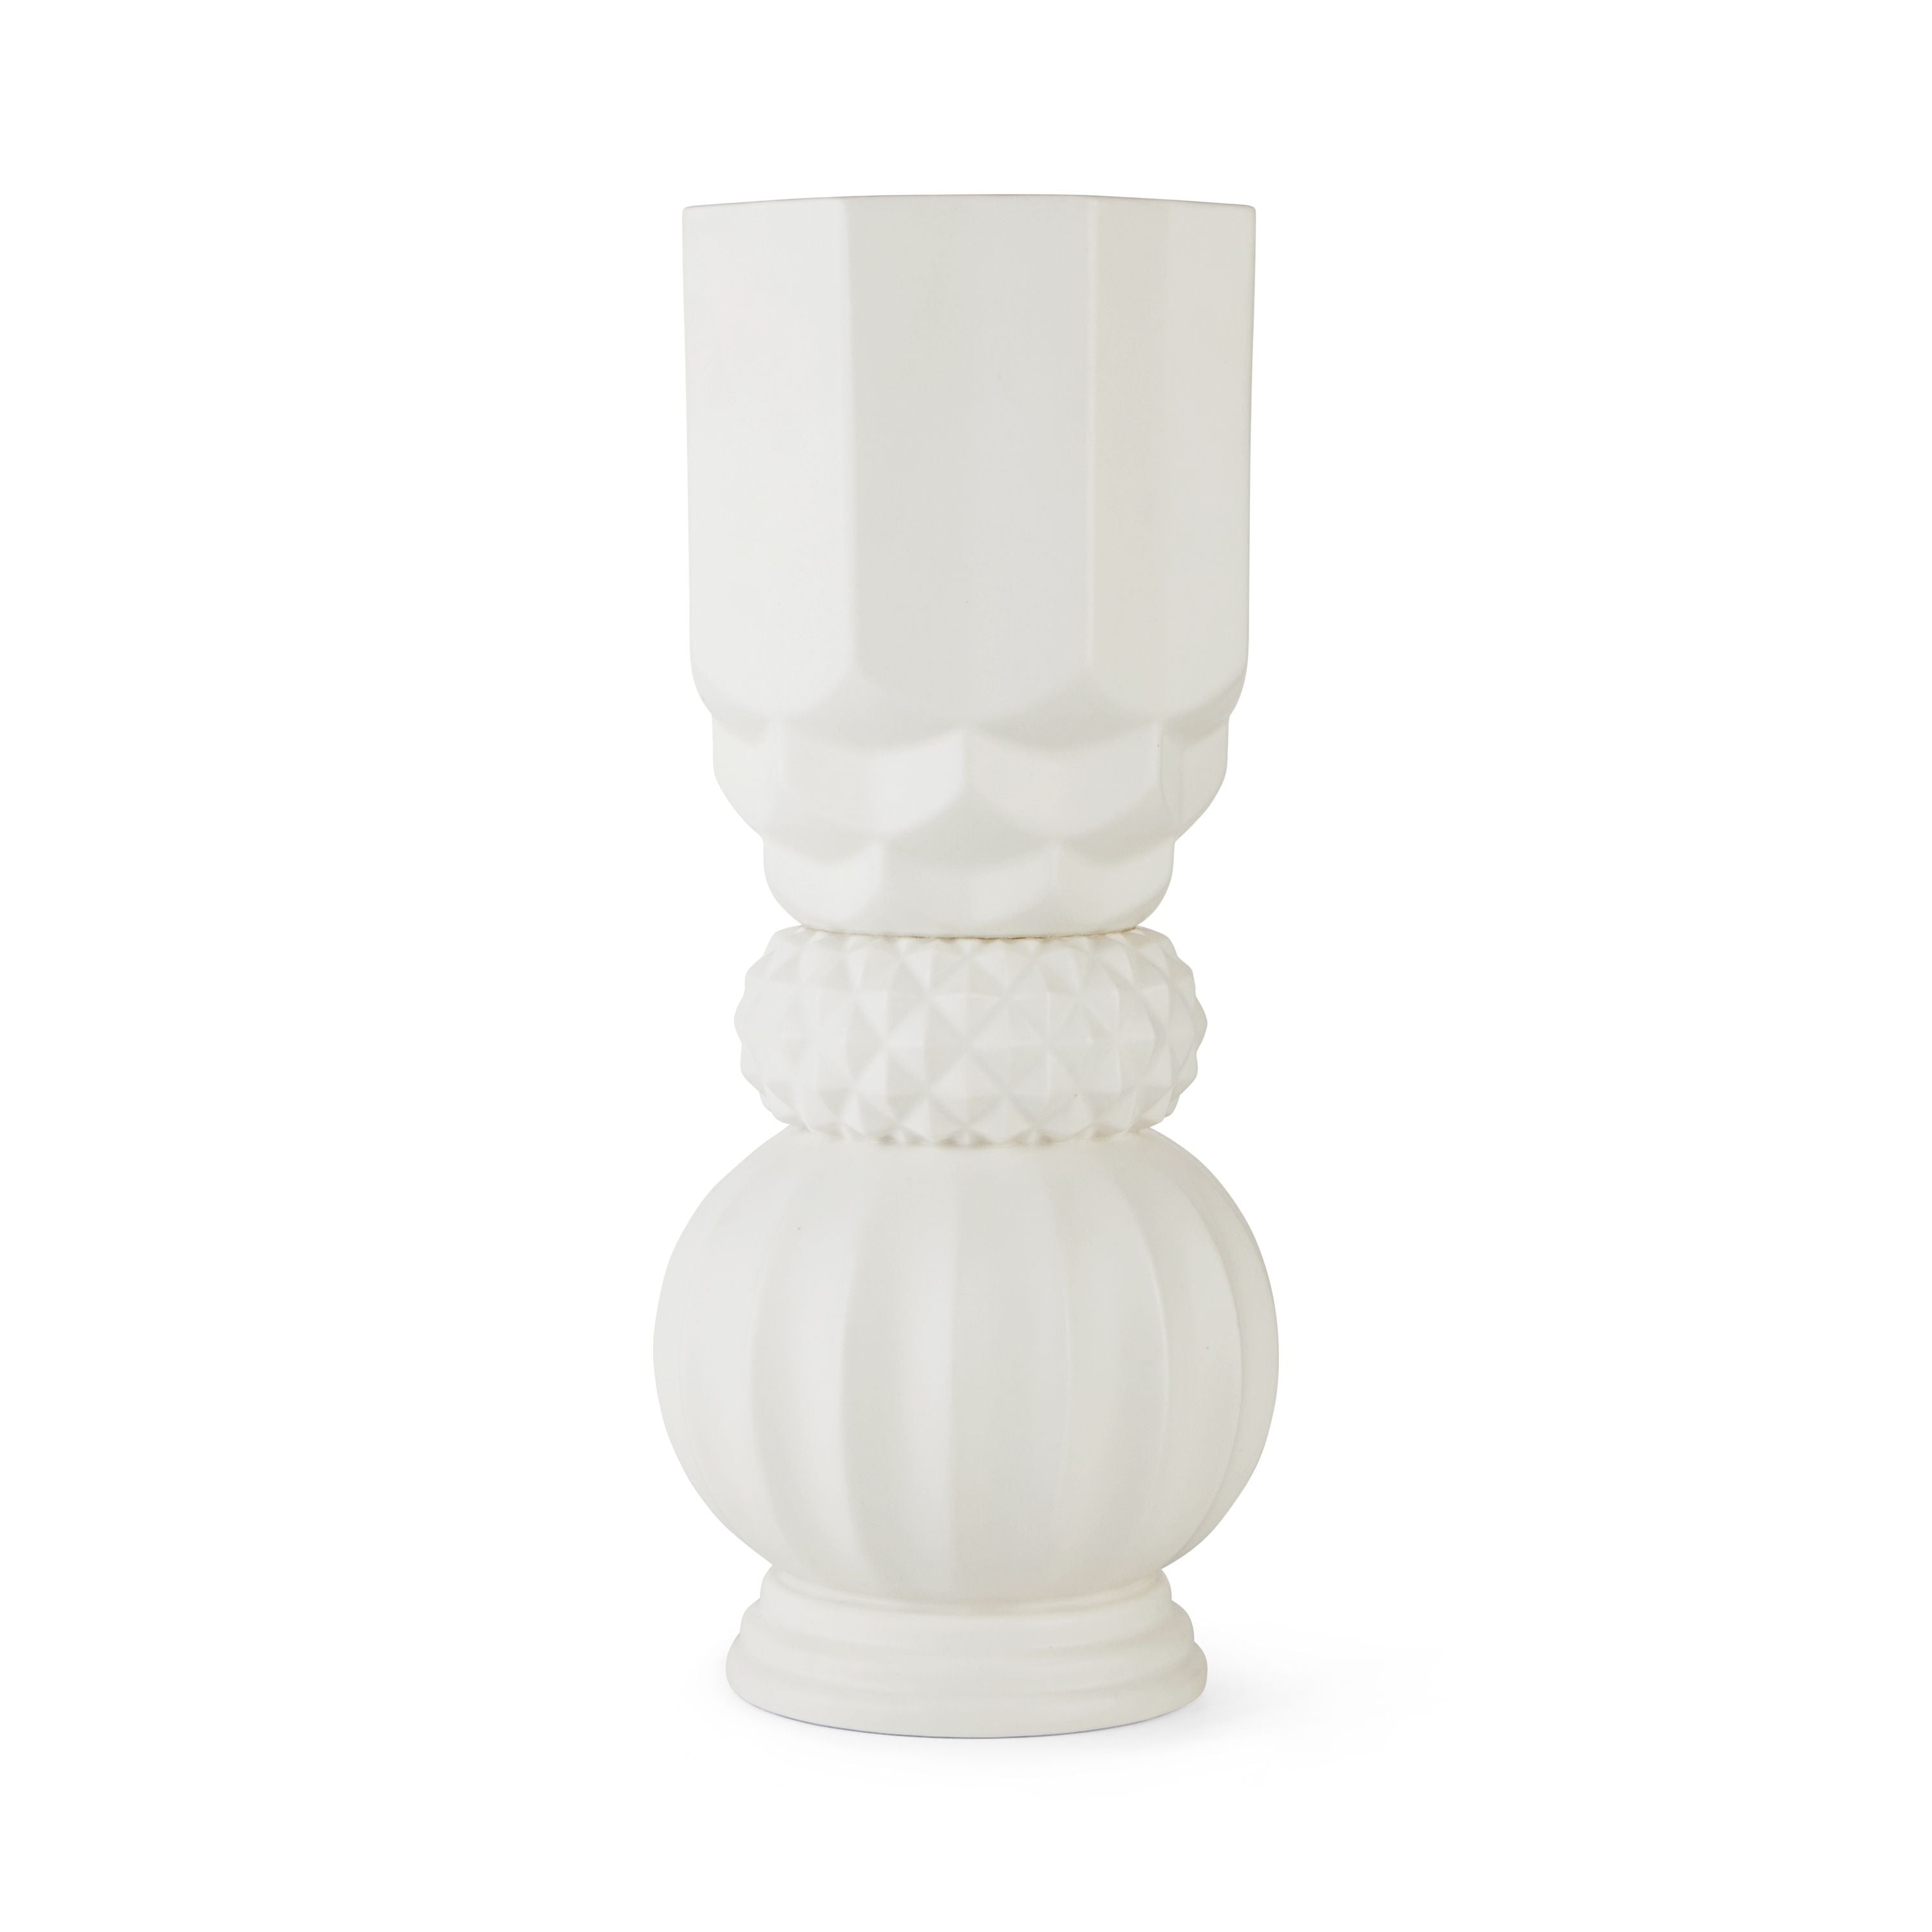 Dottir Samsurium Towerbell Vase, White